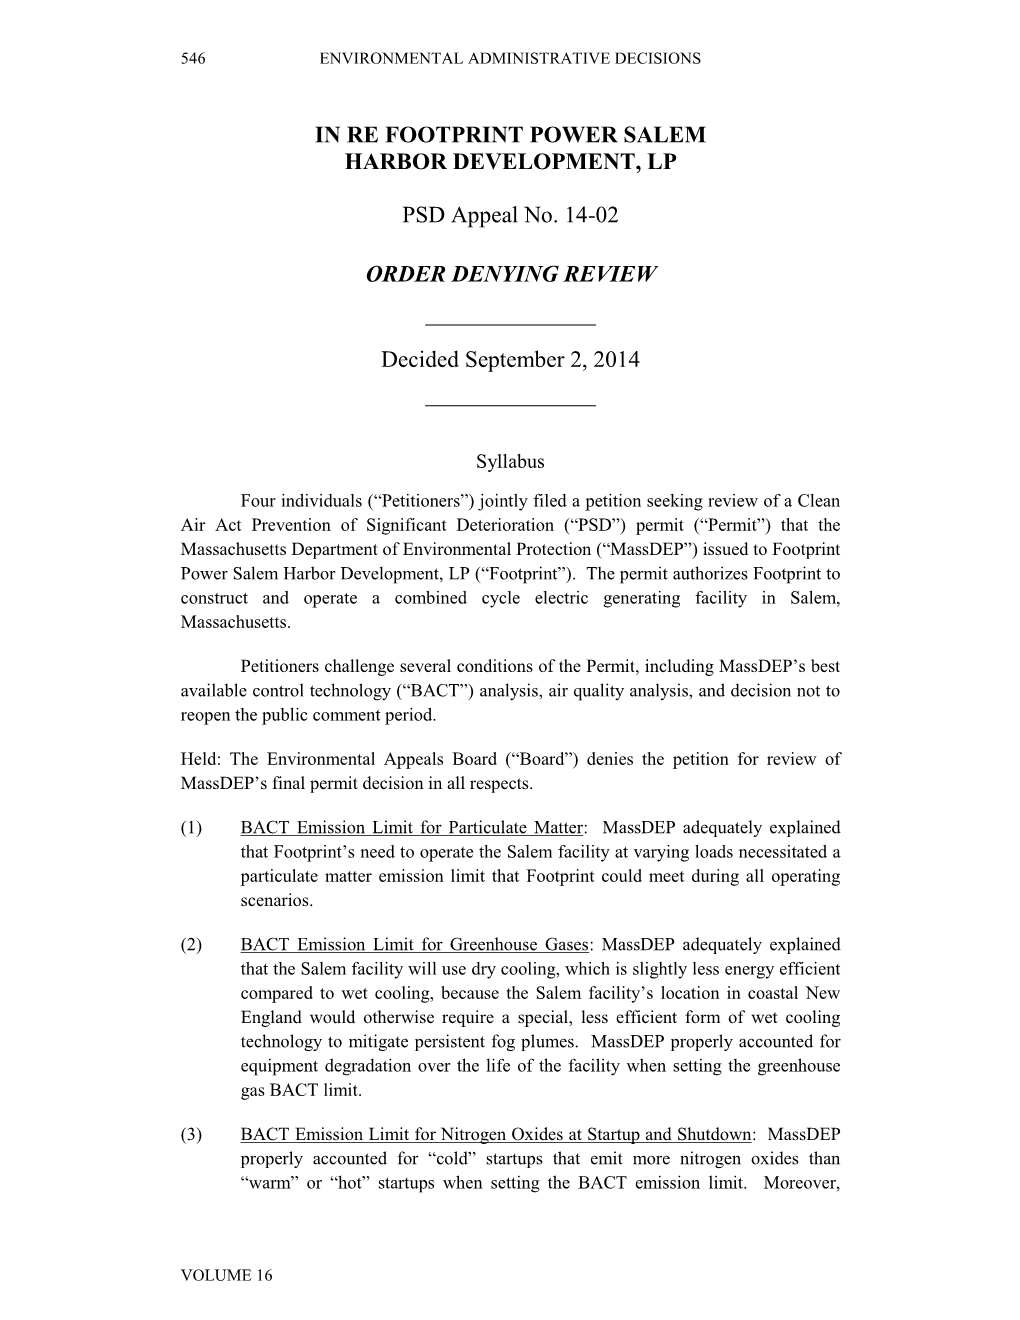 IN RE FOOTPRINT POWER SALEM HARBOR DEVELOPMENT, LP PSD Appeal No. 14-02 ORDER DENYING REVIEW Decided September 2, 2014